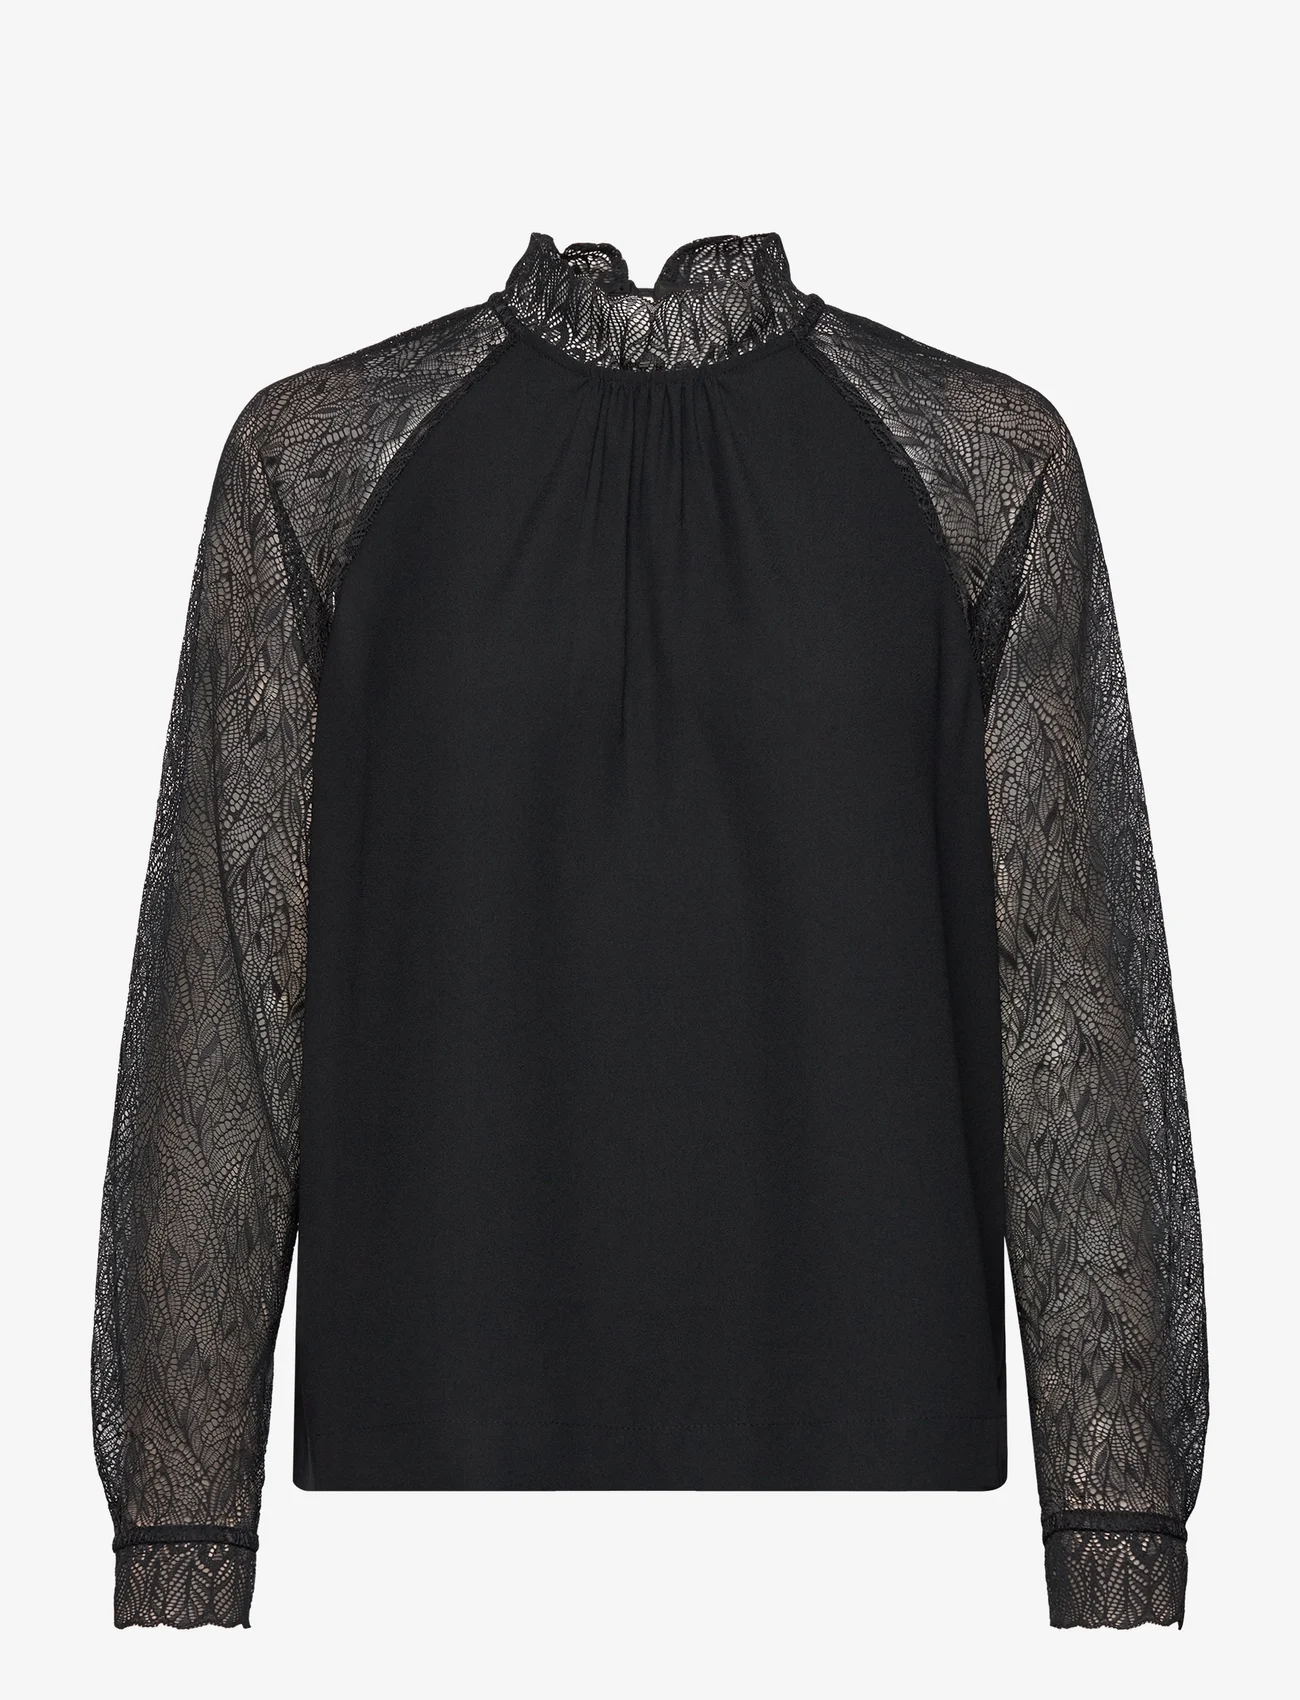 Esprit Casual - Blouses woven - bluzki z długimi rękawami - black - 0